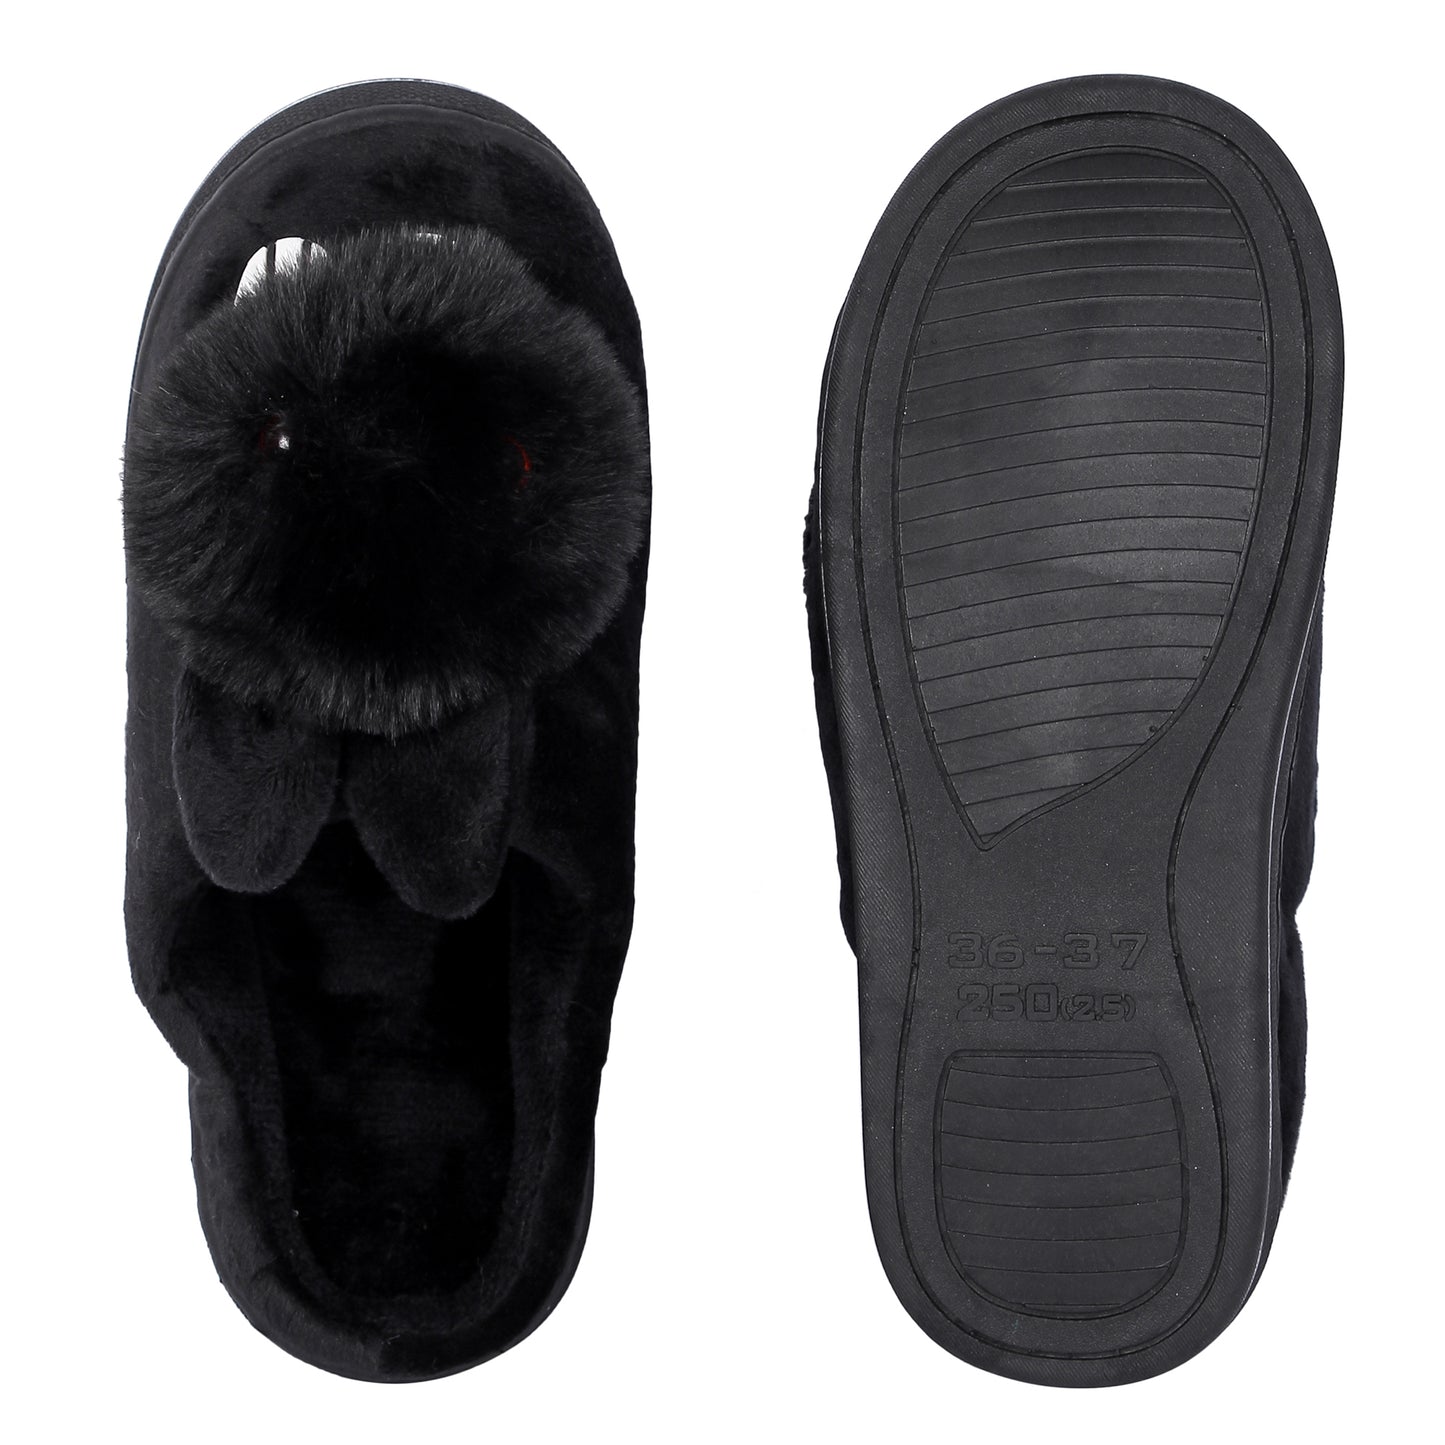 Brauch Women's Black Cute Rabbit Winter Slippers